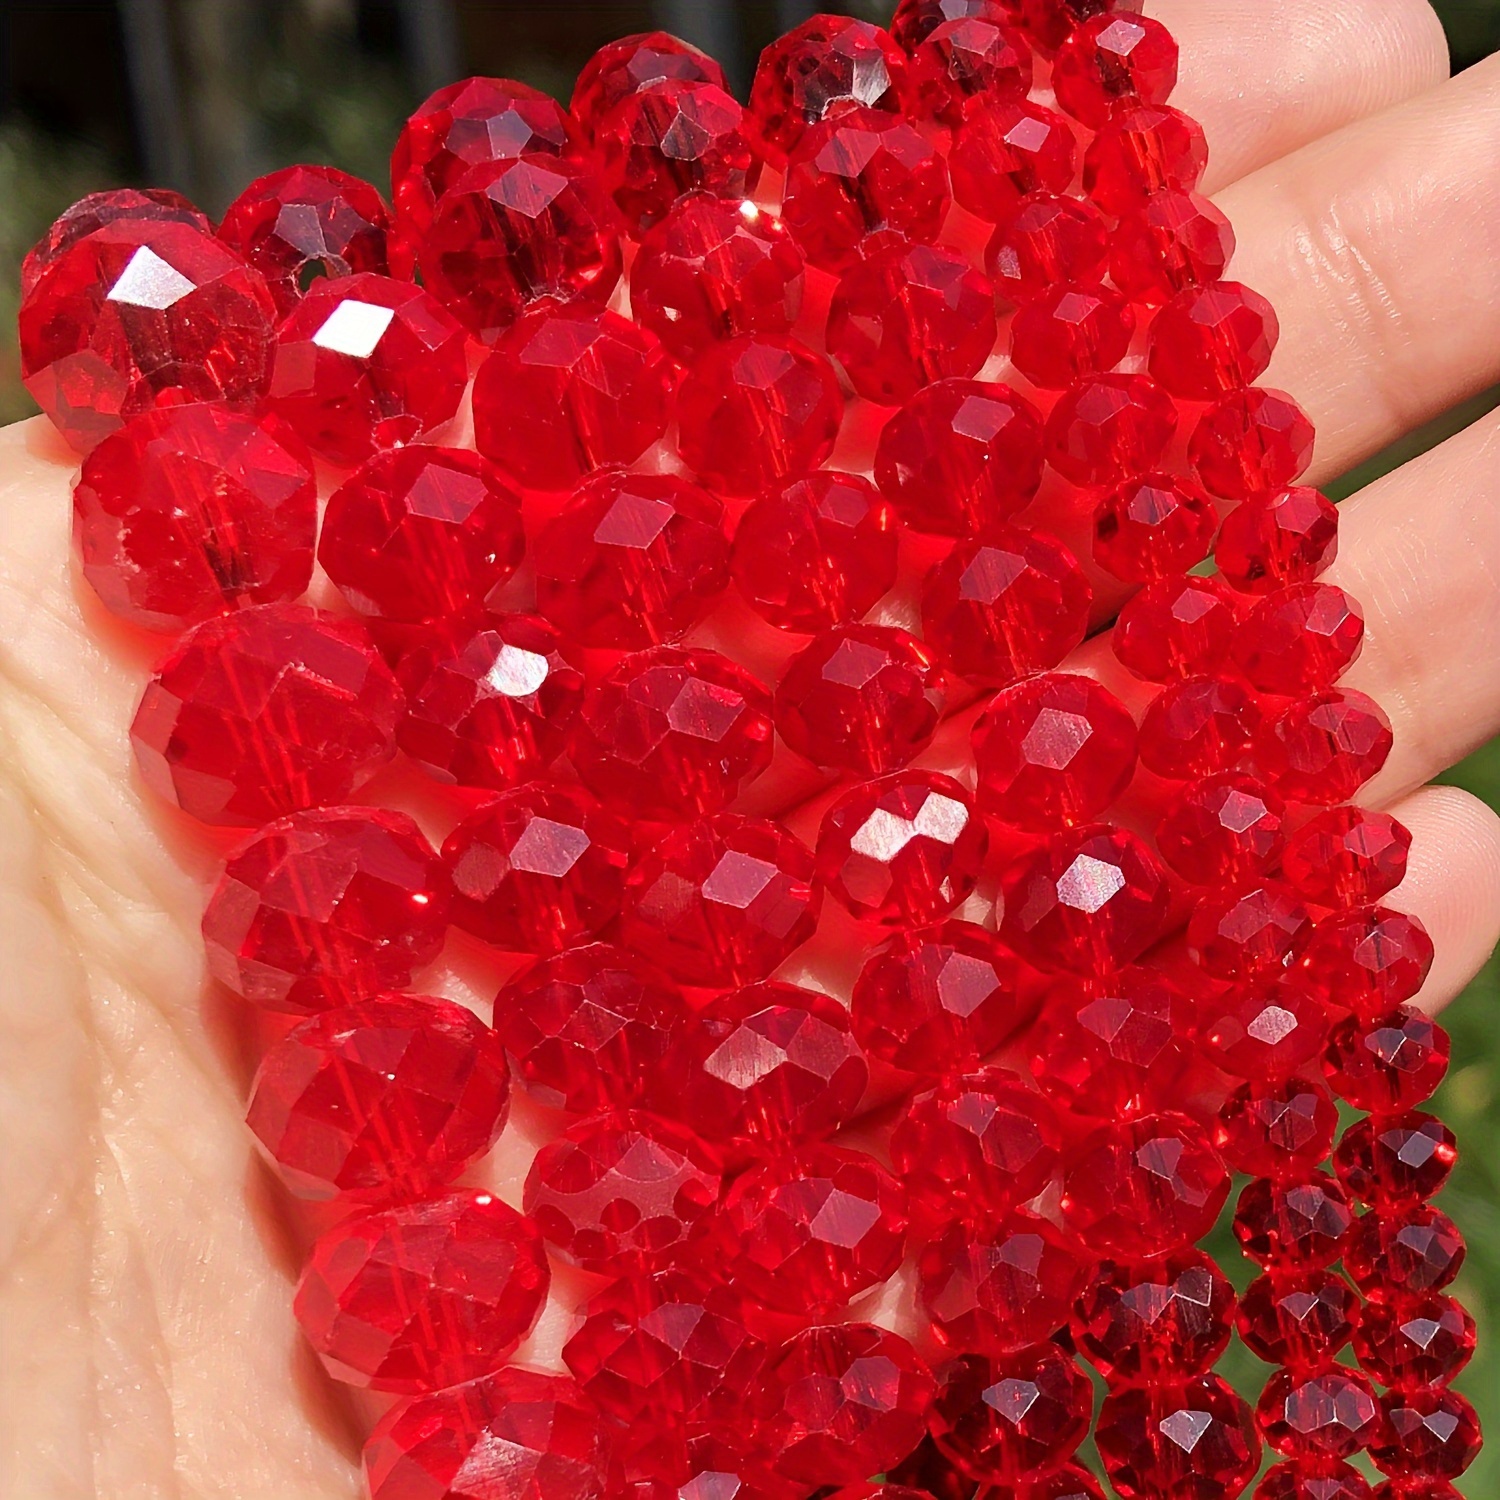 Bulk Beads Heart Beads Polymer Clay Heart Beads Assorted Beads 50 Pieces Wholesale  Beads 10mm Beads 